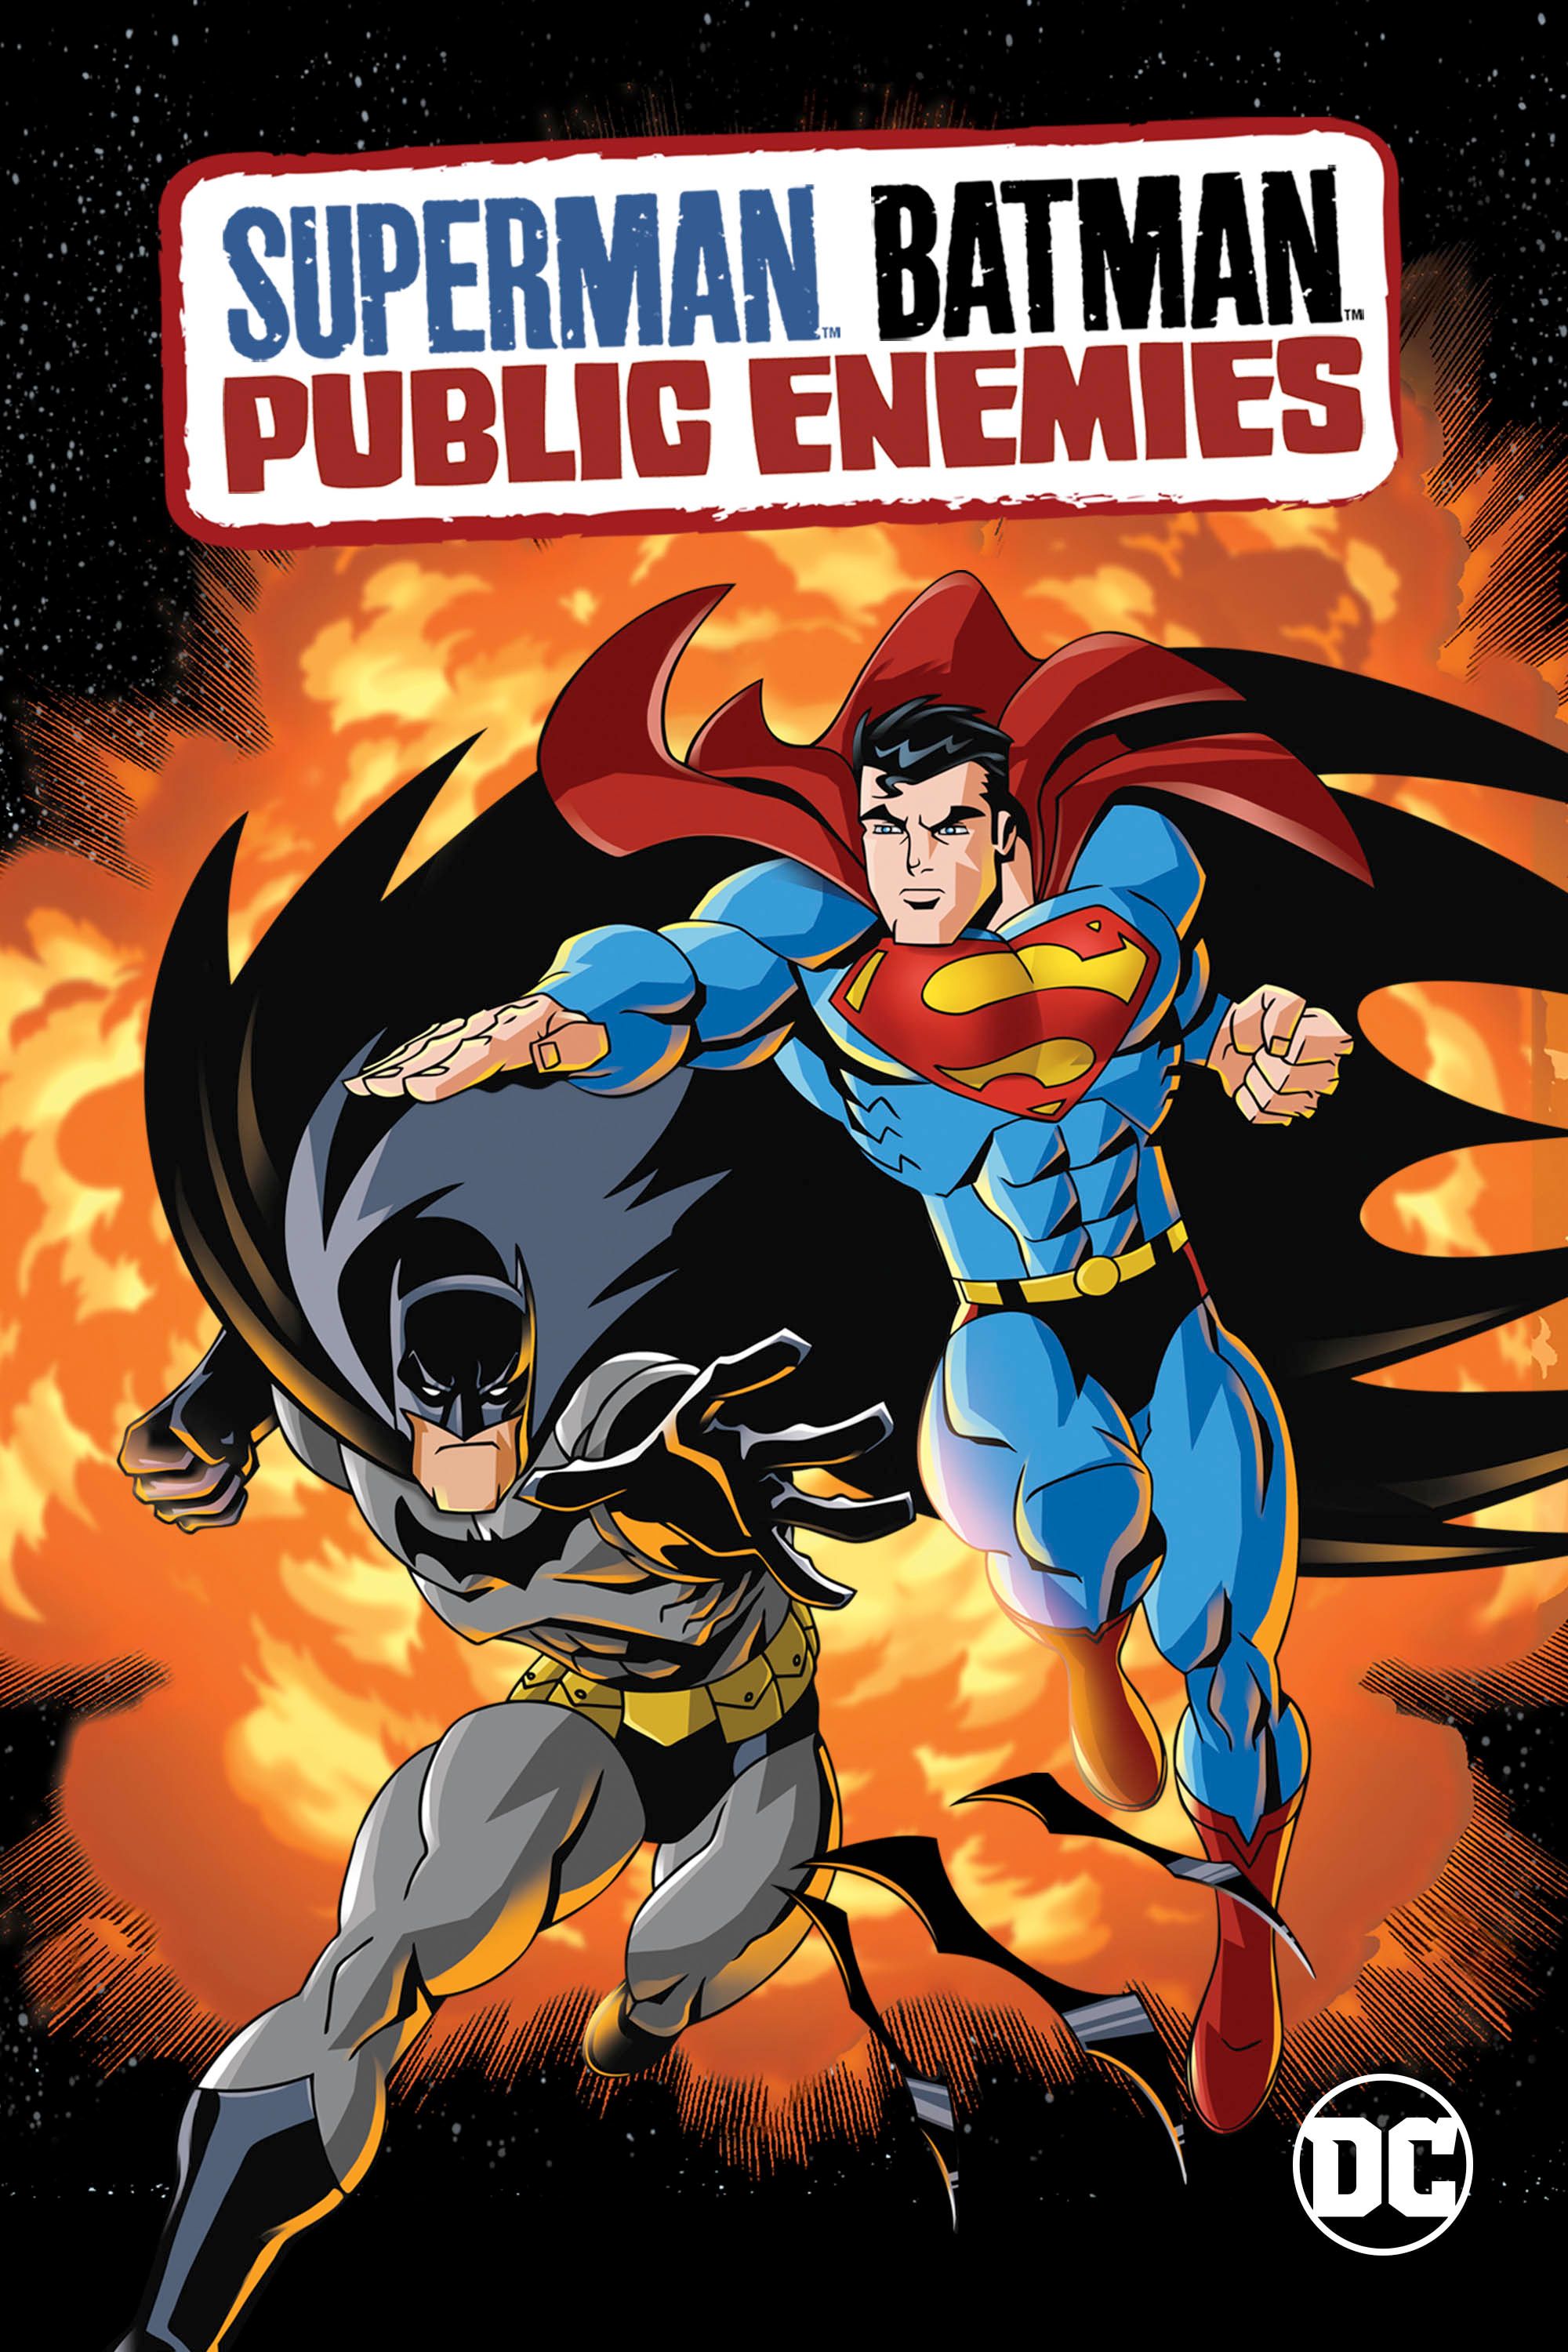 Arriba 61+ imagen superman batman public enemies latino